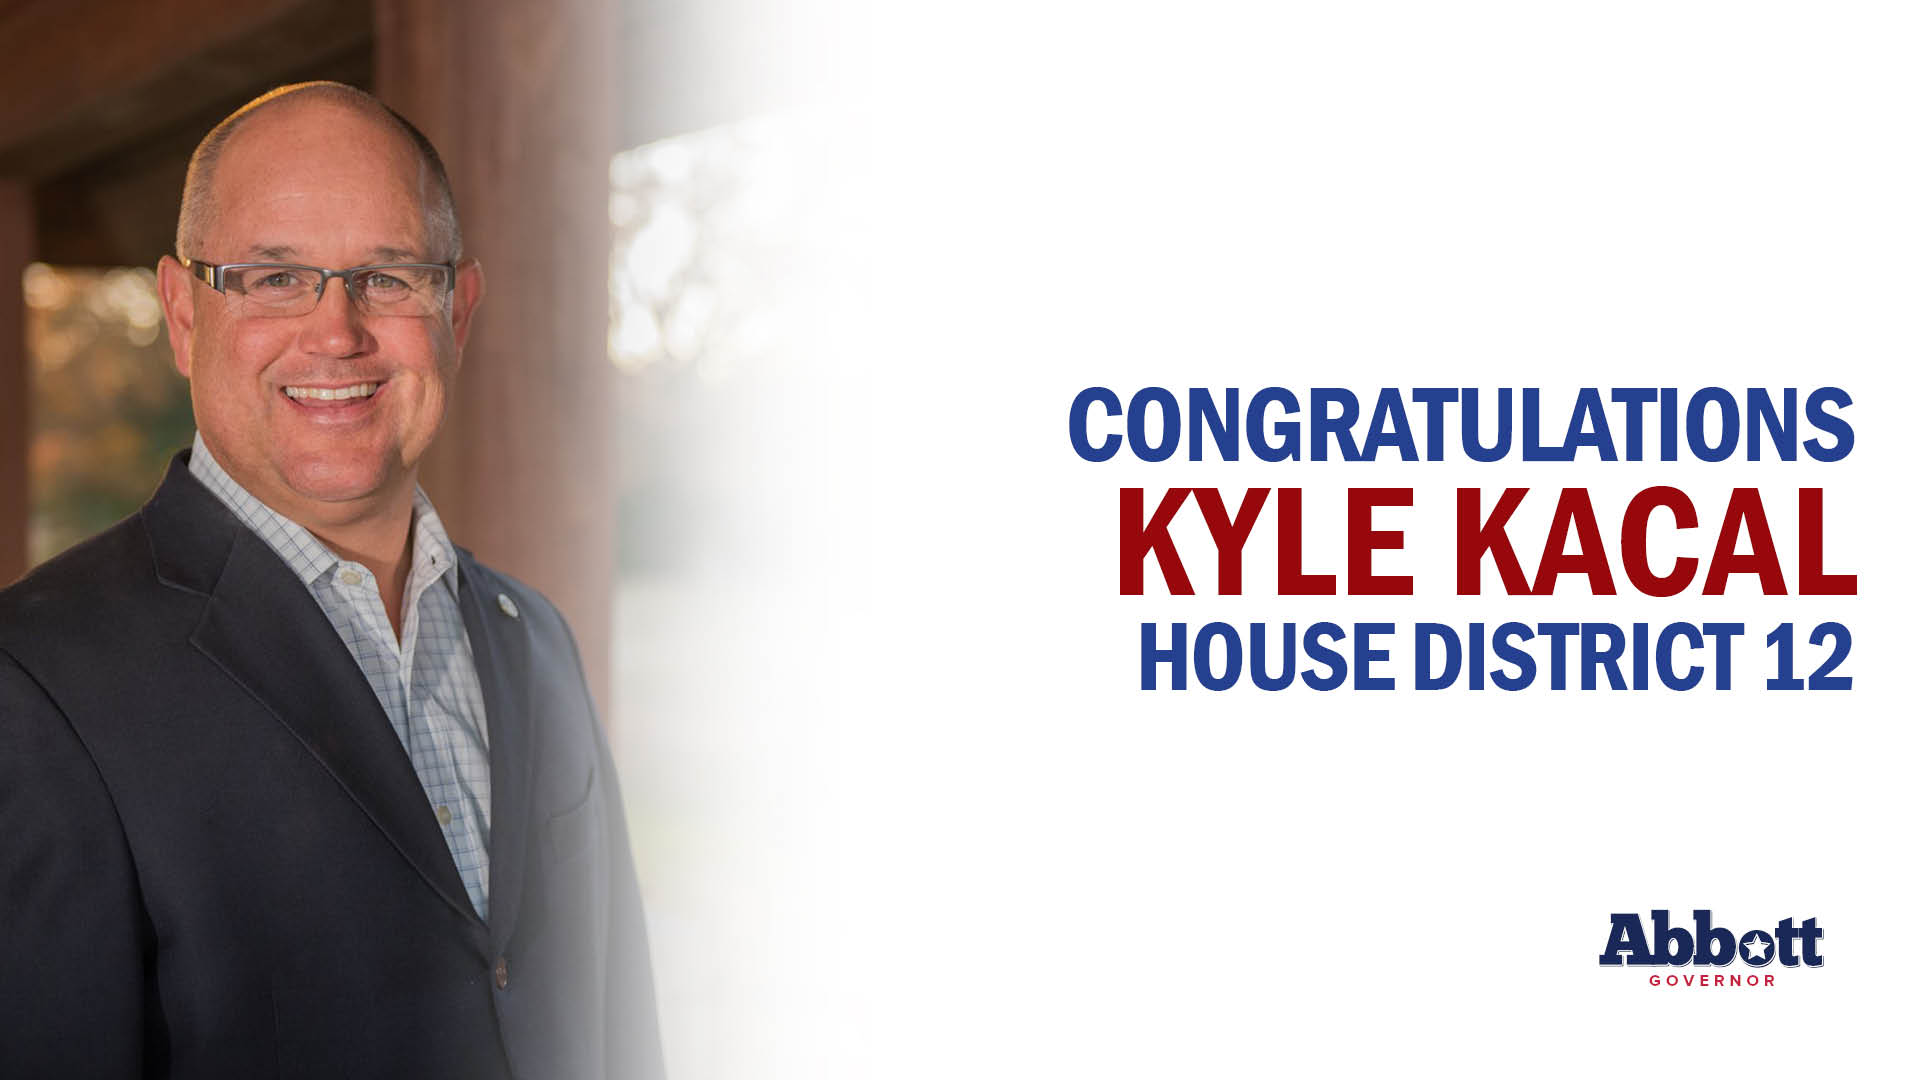 Governor Abbott Congratulates Rep. Kyle Kacal On Re-Election